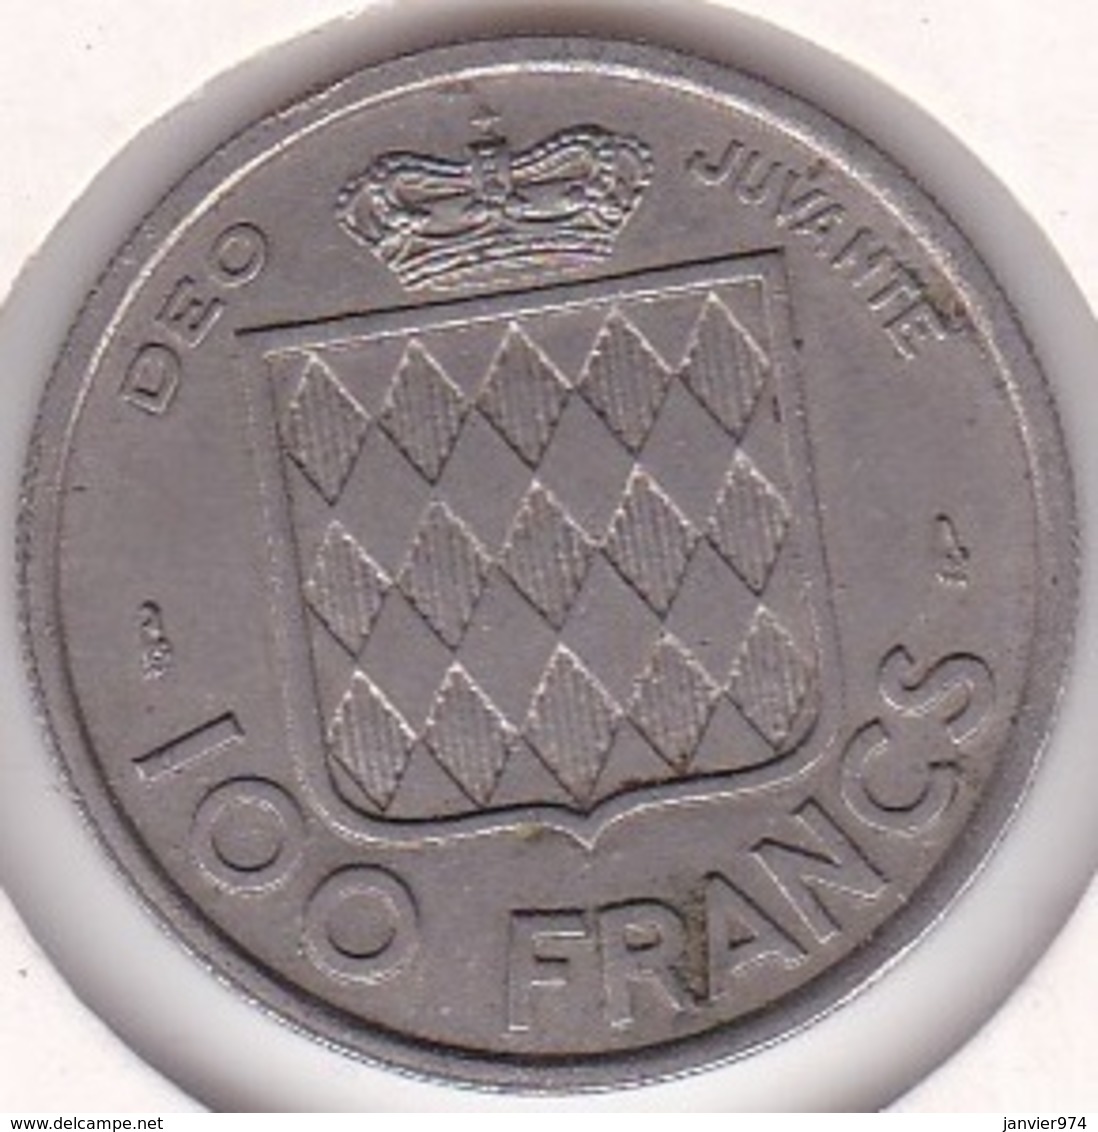 MONACO. 100 FRANCS 1956. RAINIER III - 1949-1956 Old Francs